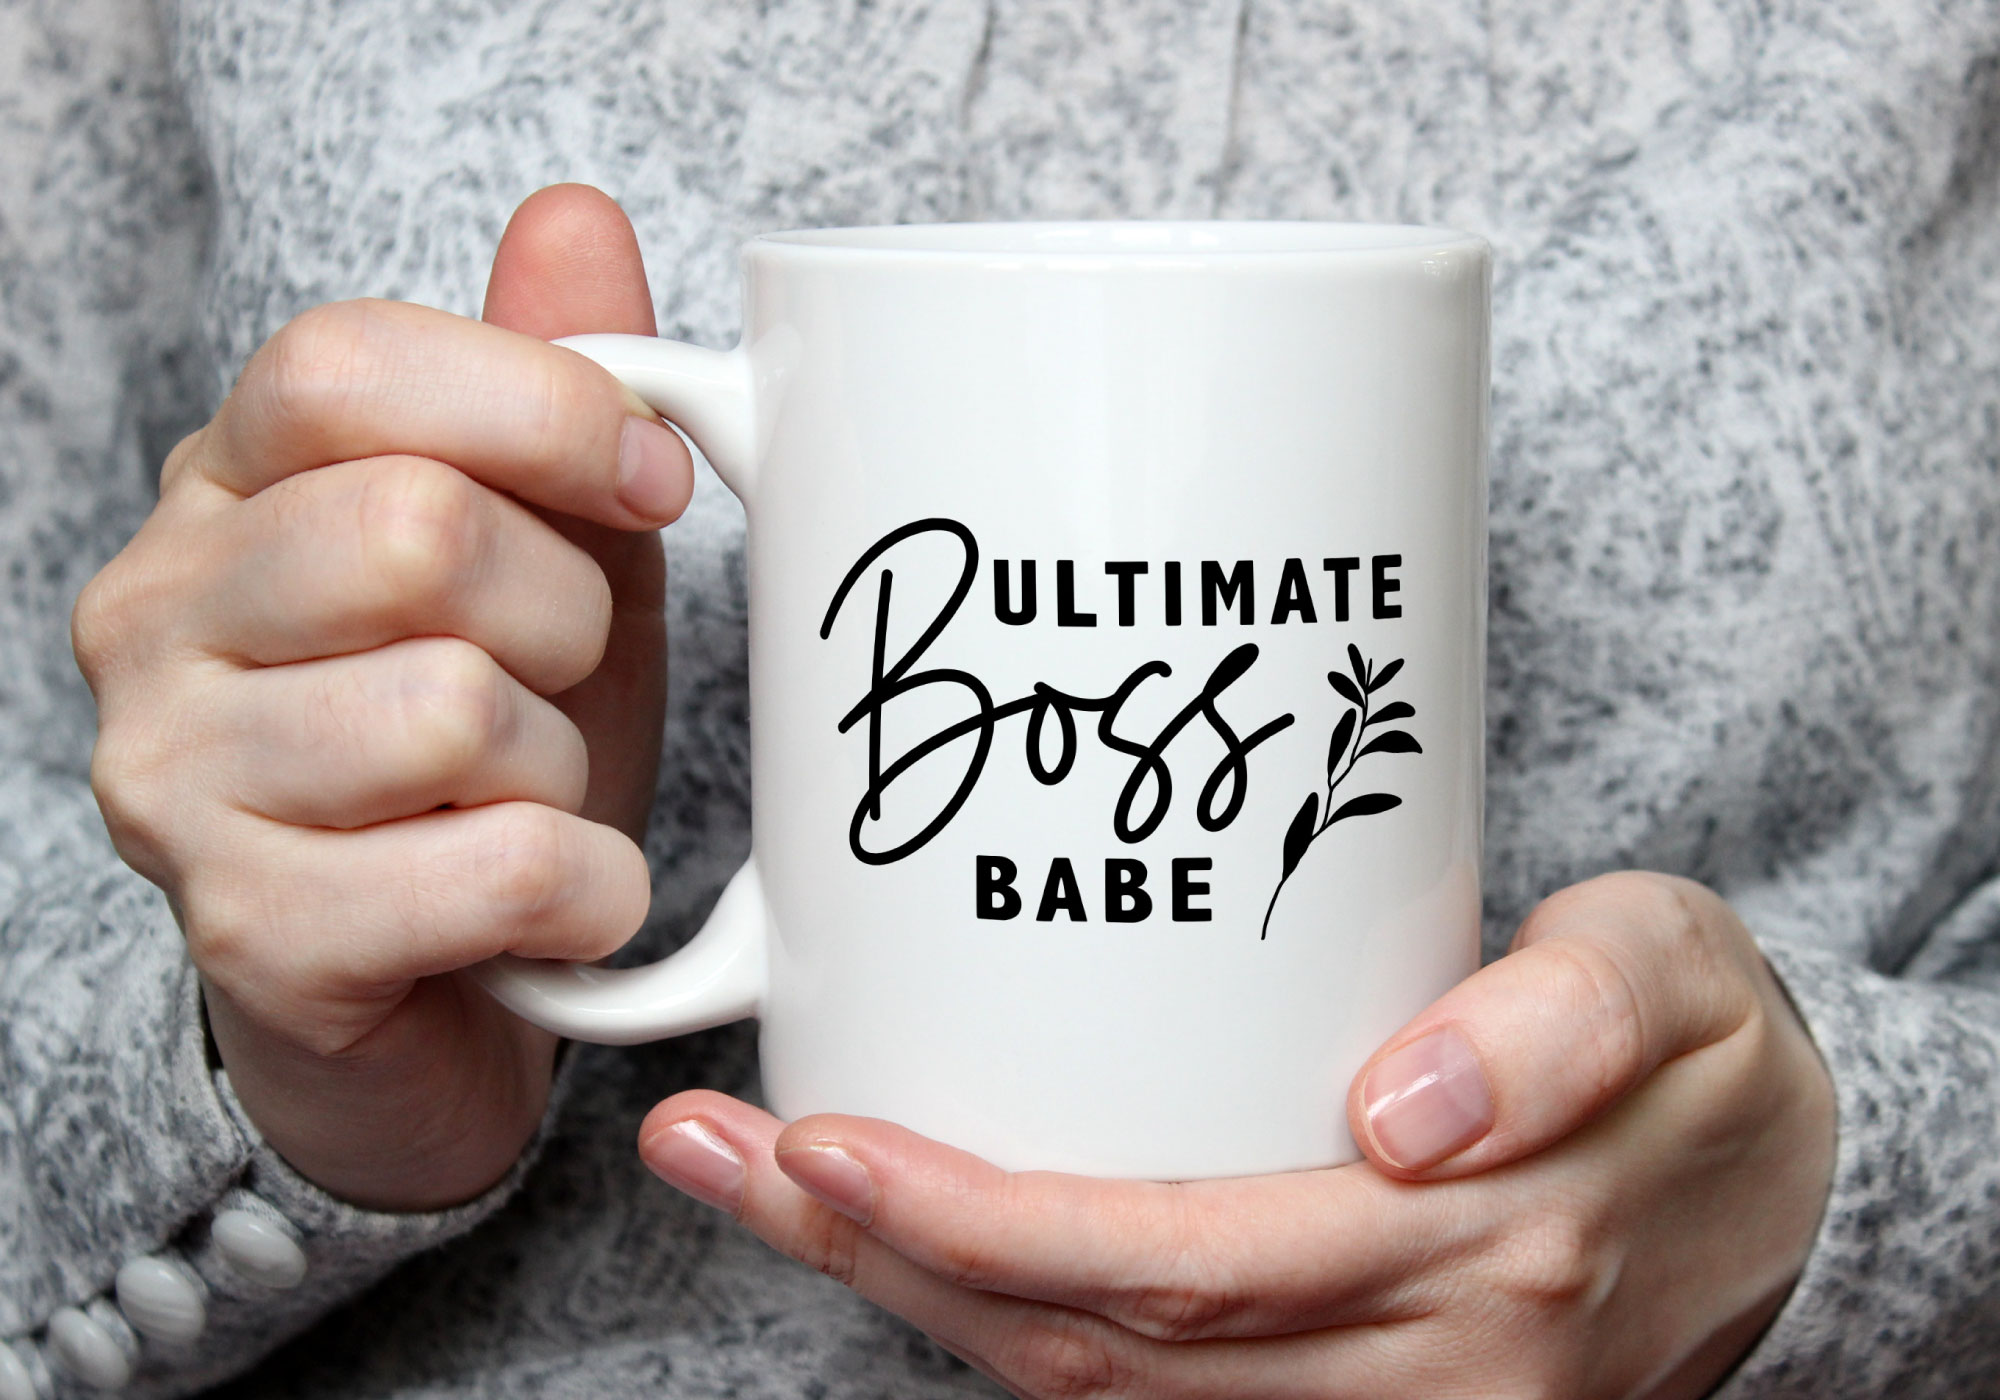 Free Ultimate Boss Babe SVG